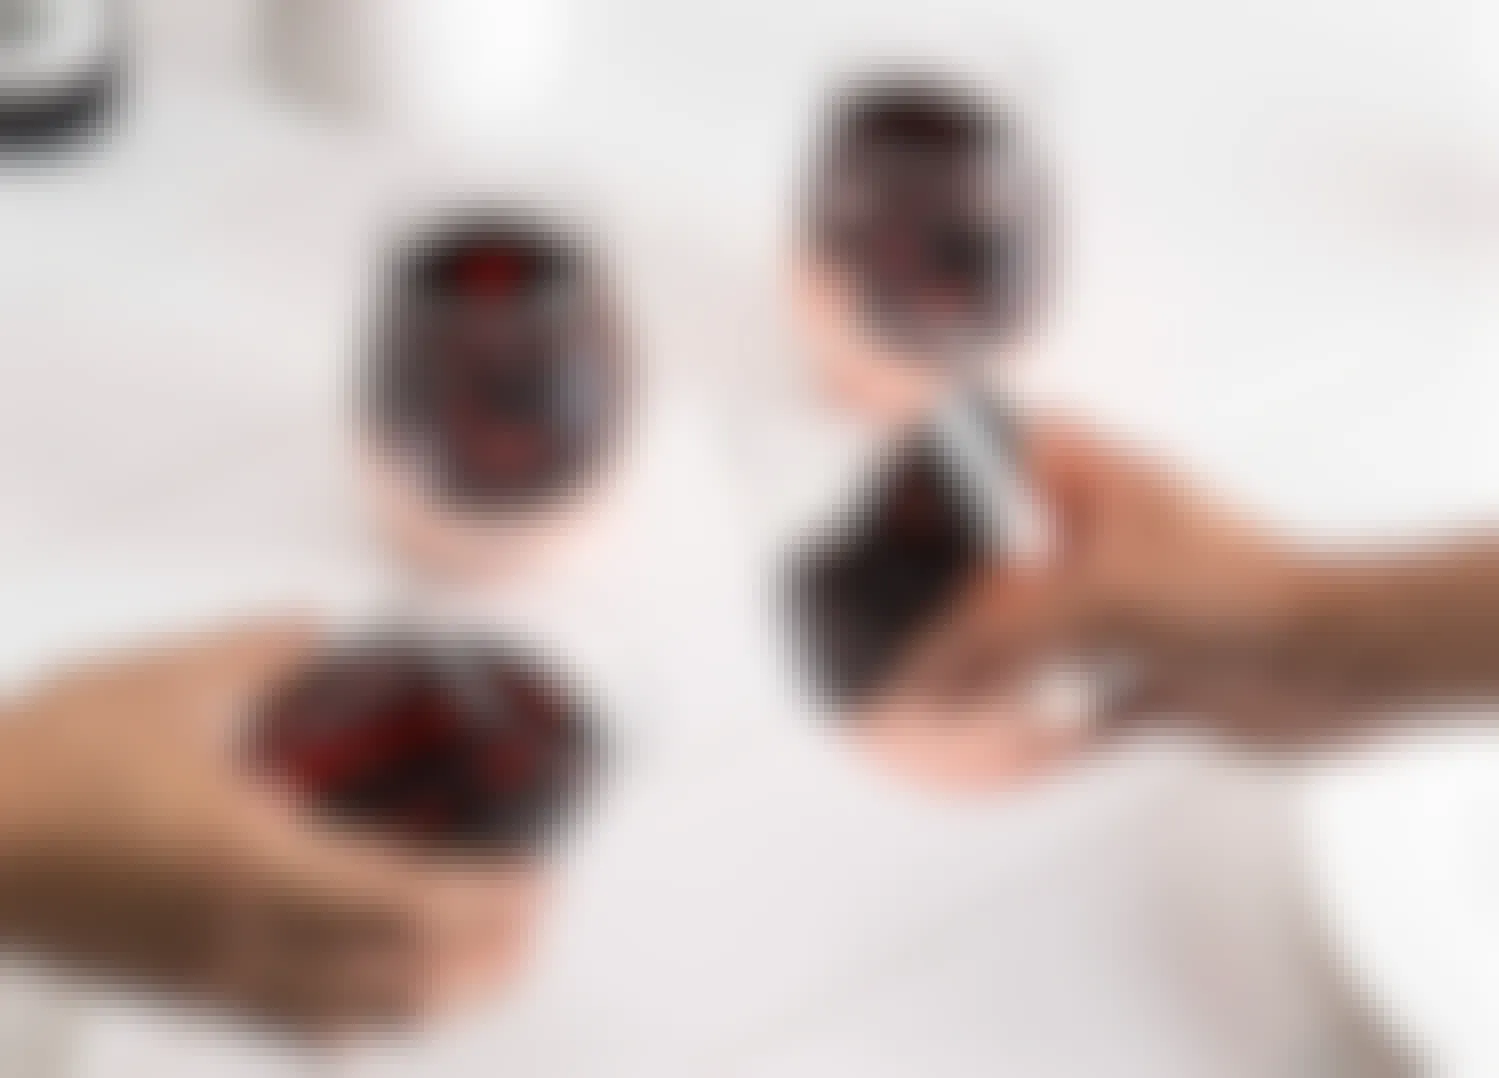 amazon-mygift-stemless-wine-glasses